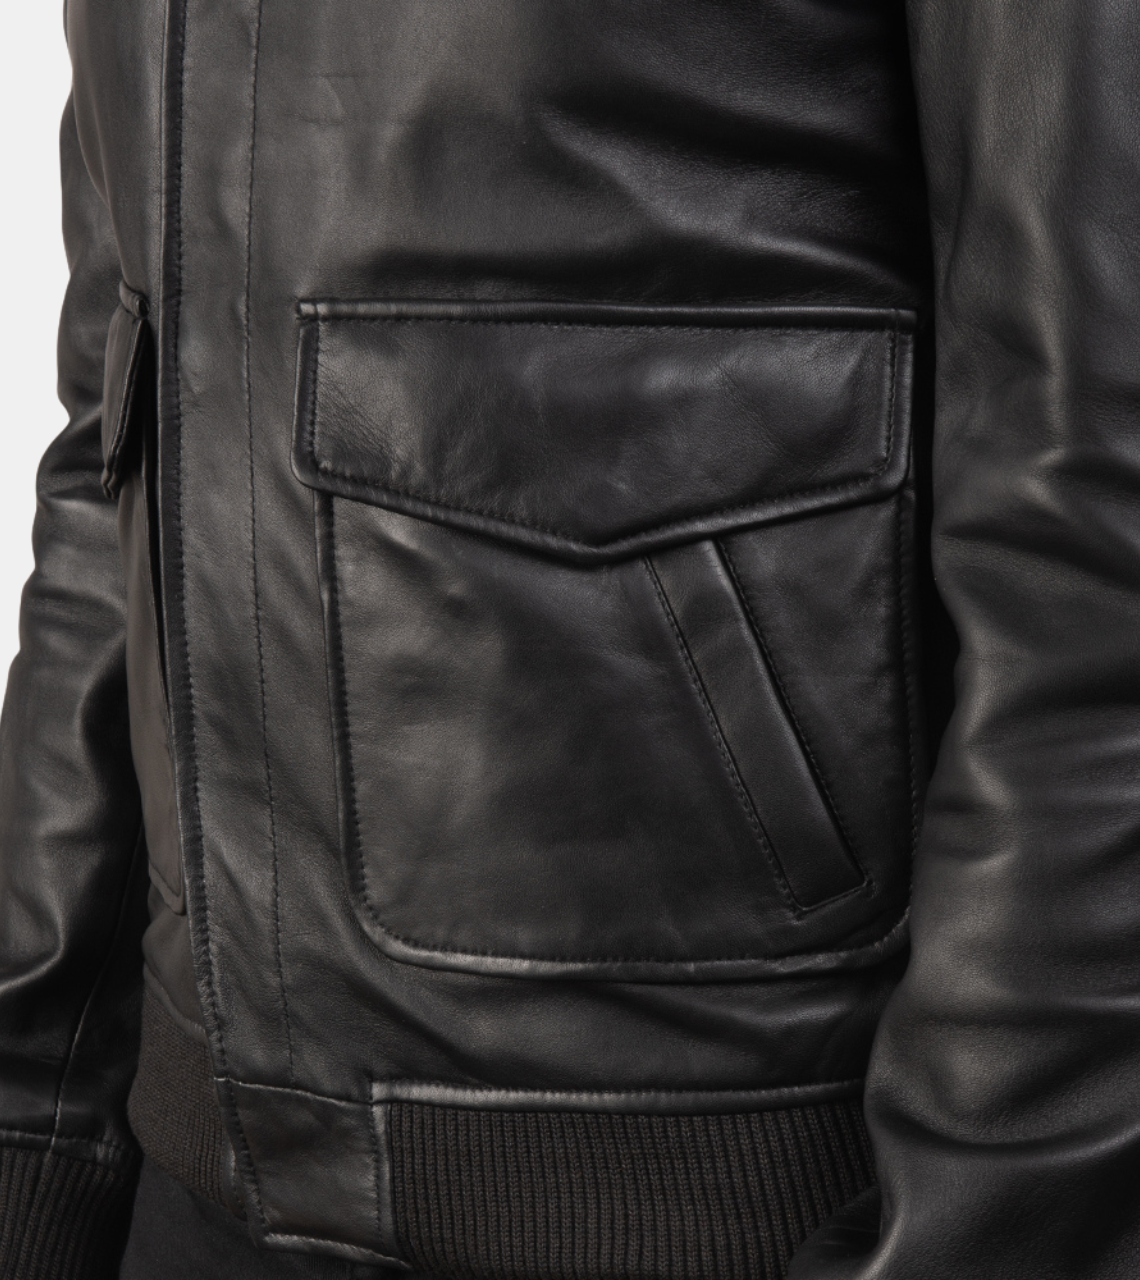 Tempest Black Bomber Leather Jacket For Men's